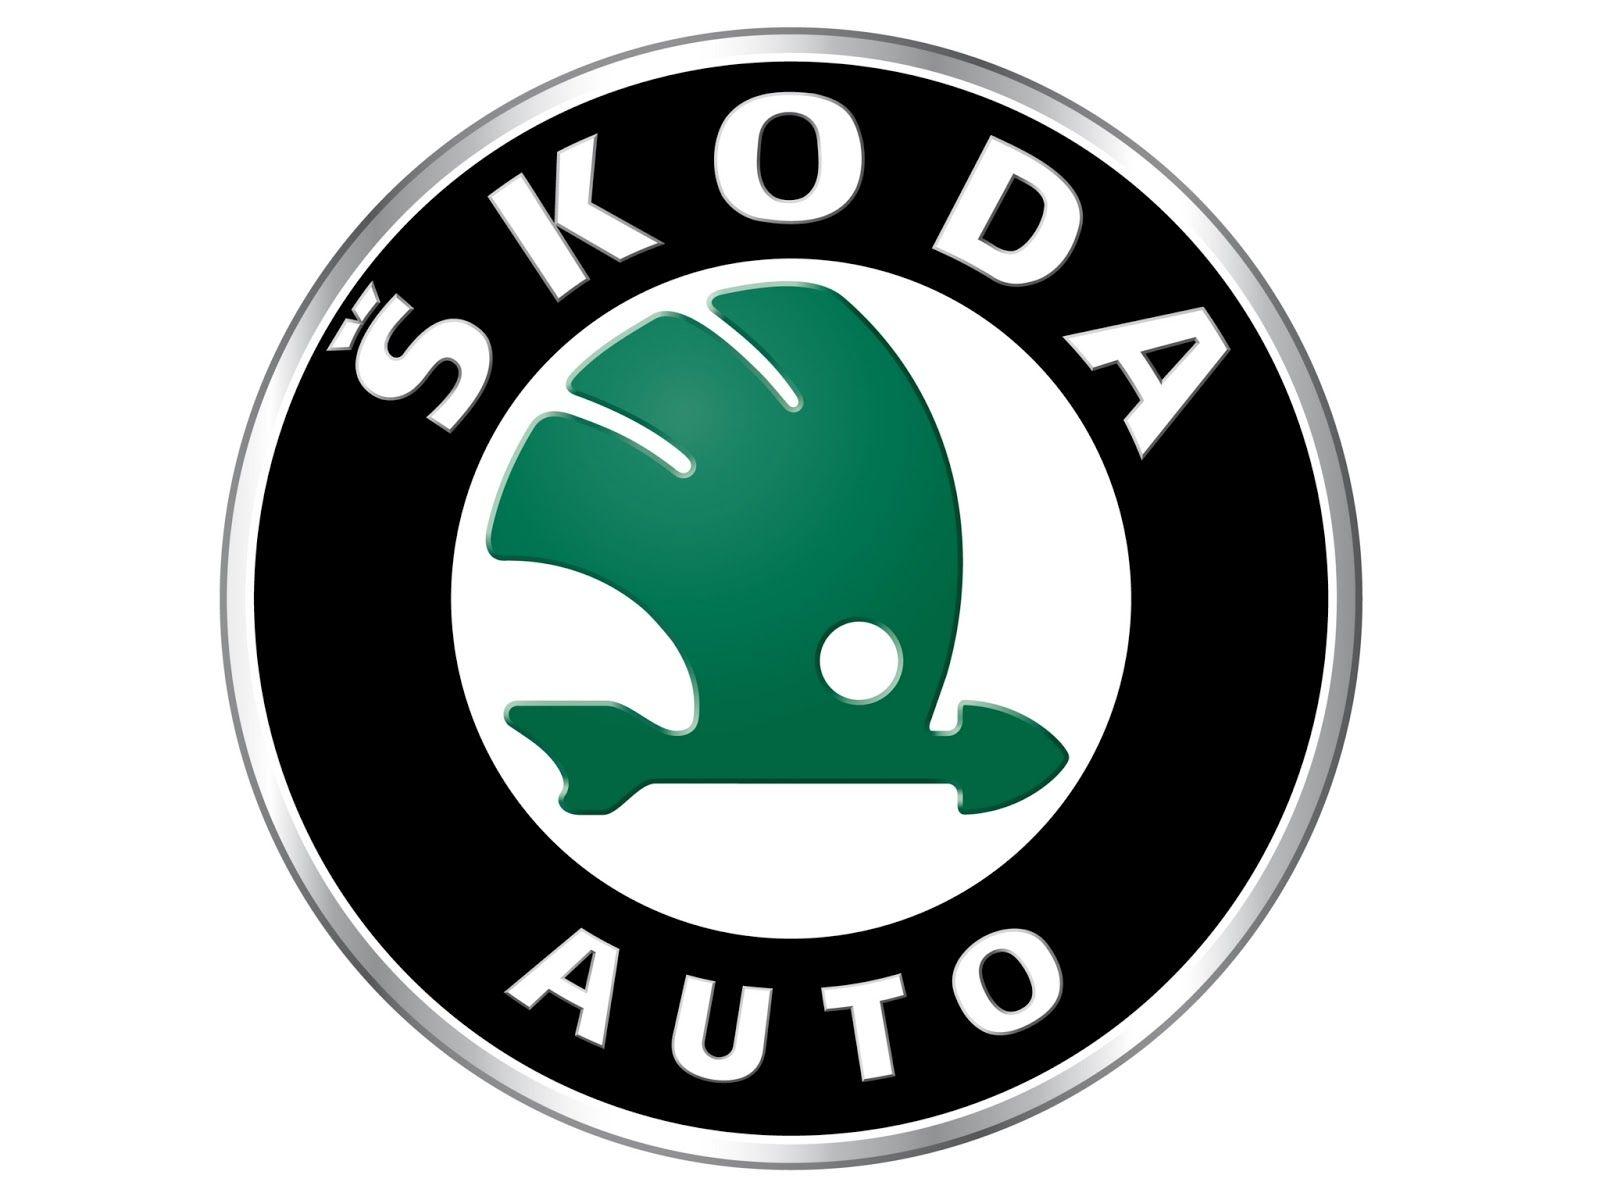 Old Skoda Logo - Škoda Logo, Škoda Car Symbol Meaning and History | Car Brand Names.com